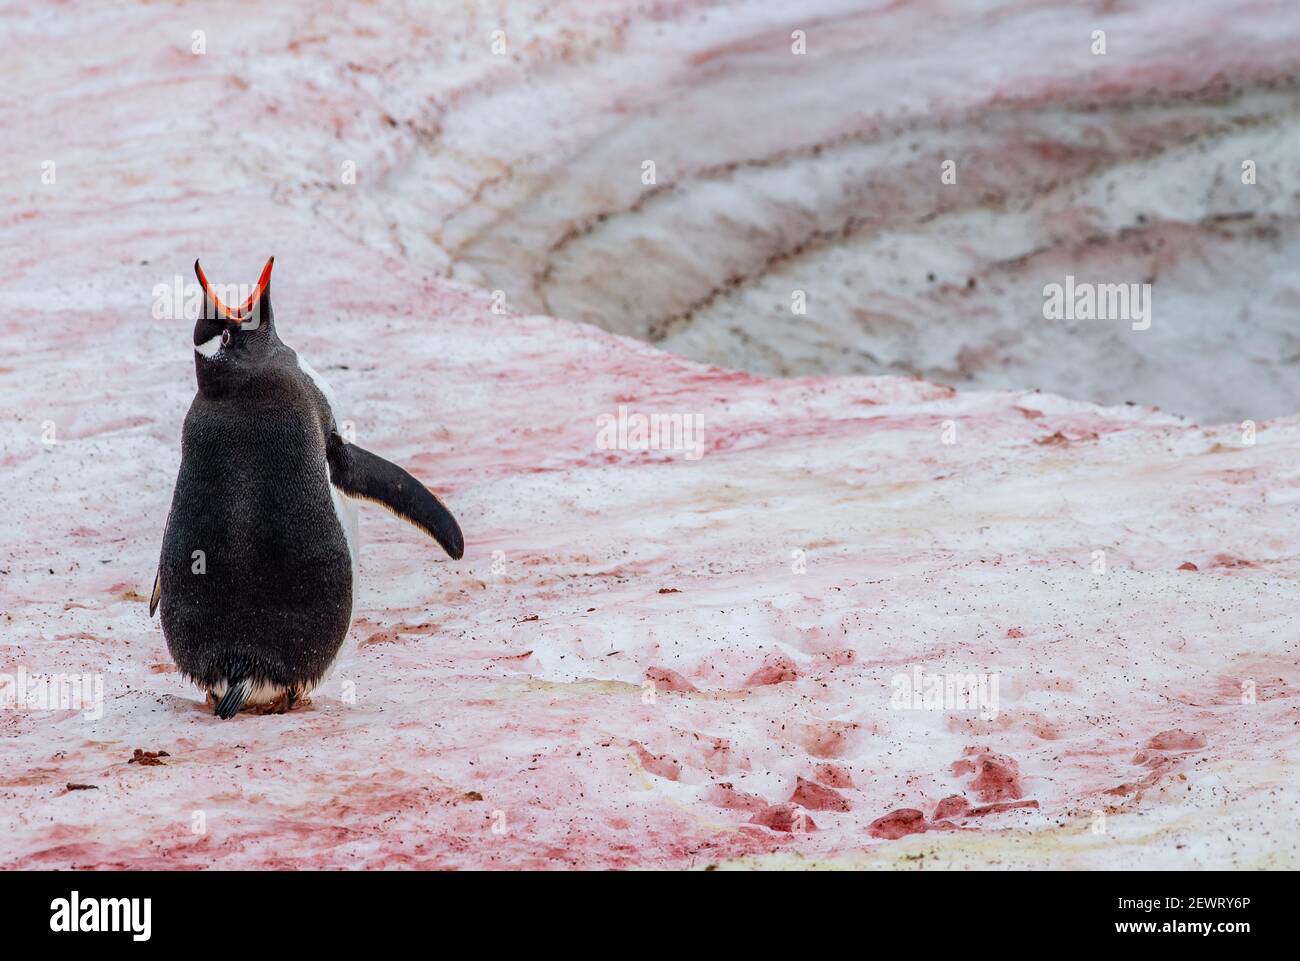 Gentoo penguin (Pygoscelis papua) vocalizing on snow with red algae, Antarctica, Polar Regions Stock Photo